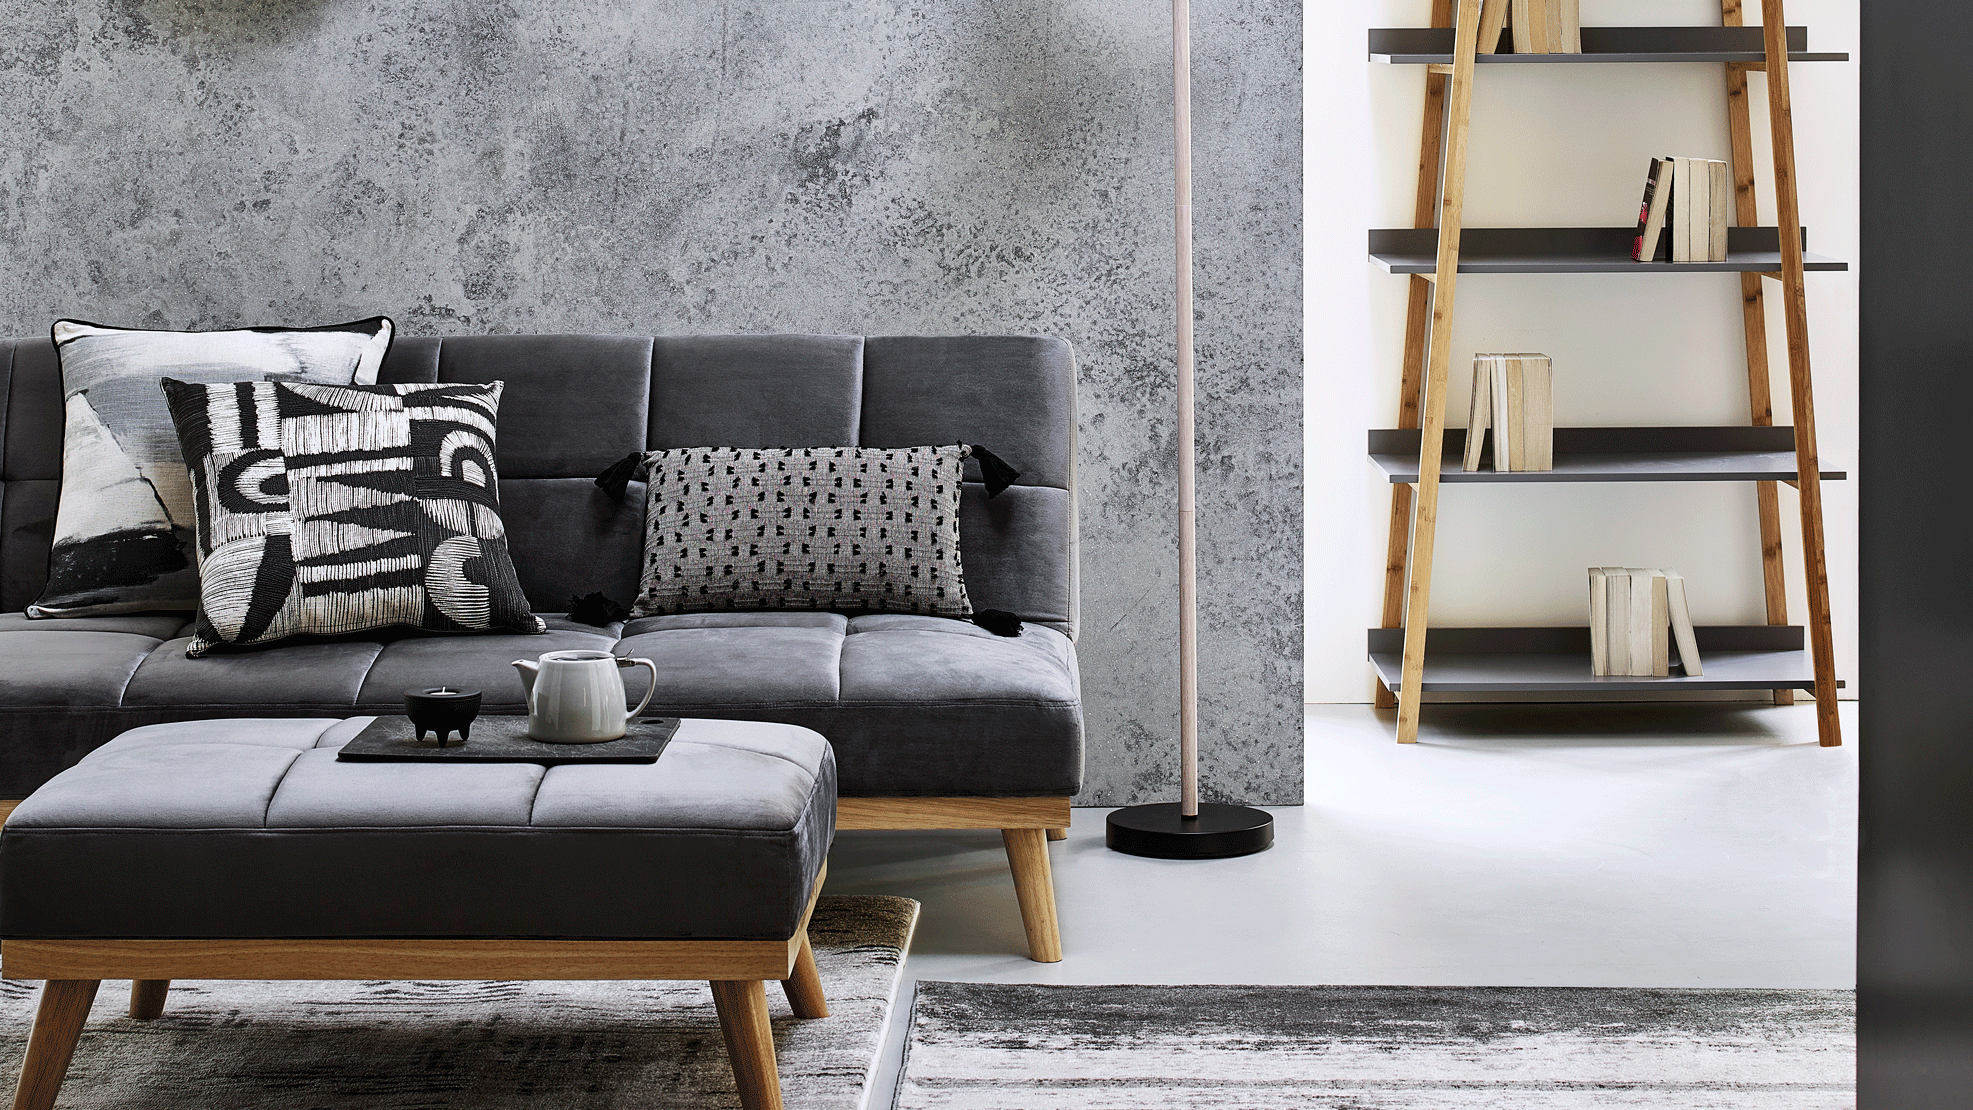 Kanso argos sofa bed in grey velvet in living room